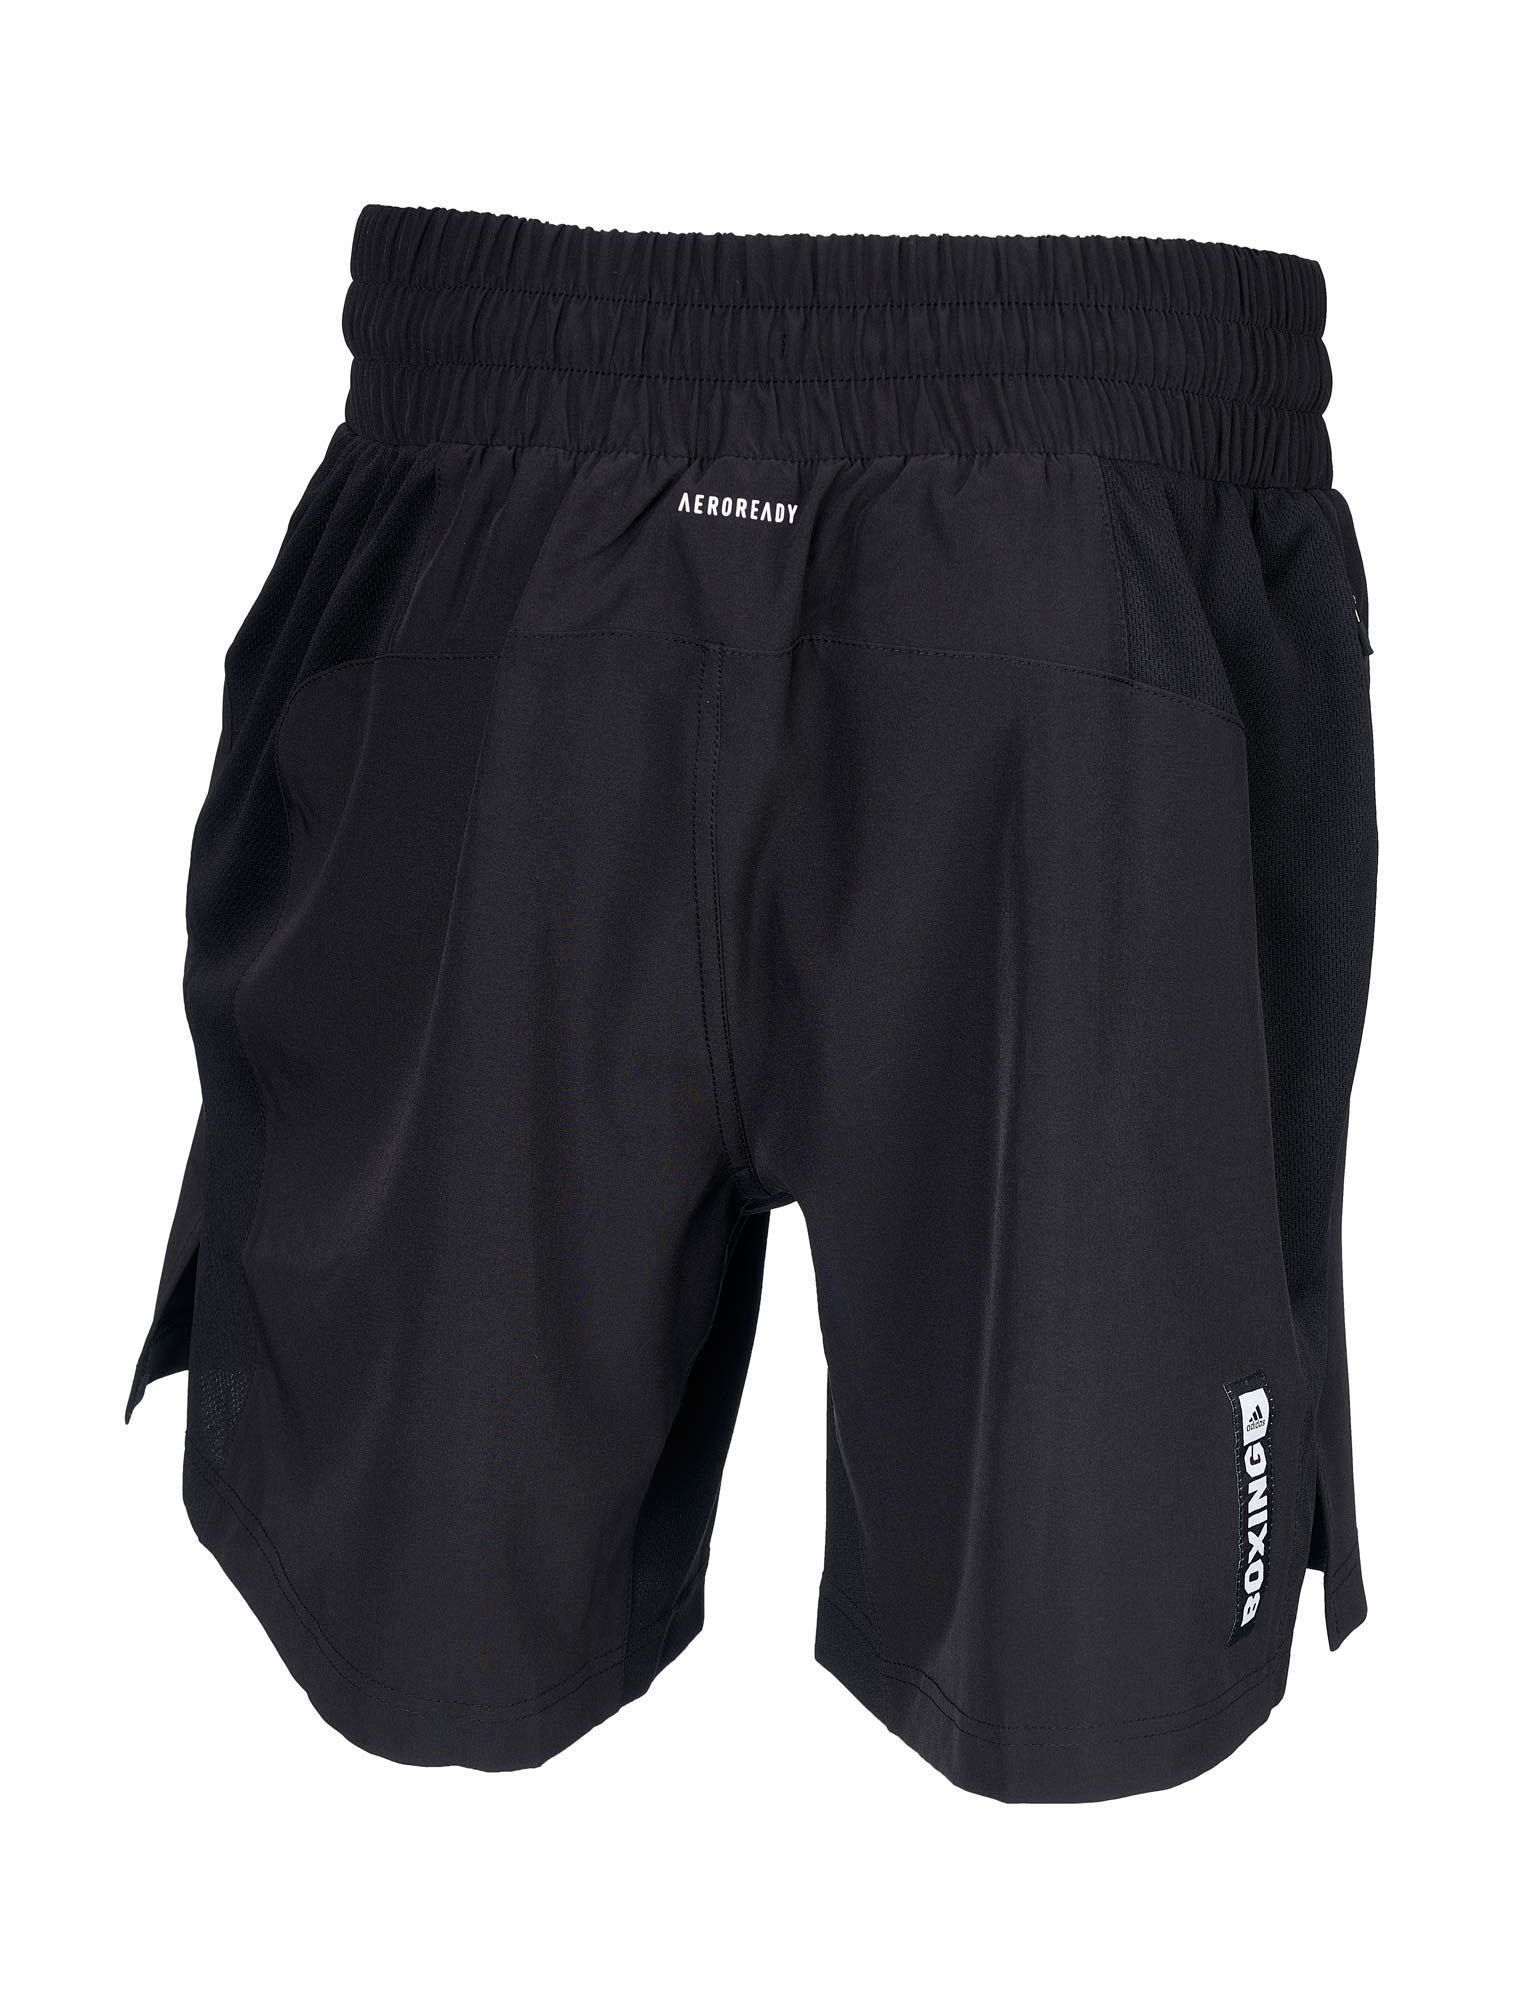 adidas boxing wear tech shorts BXWTSH01